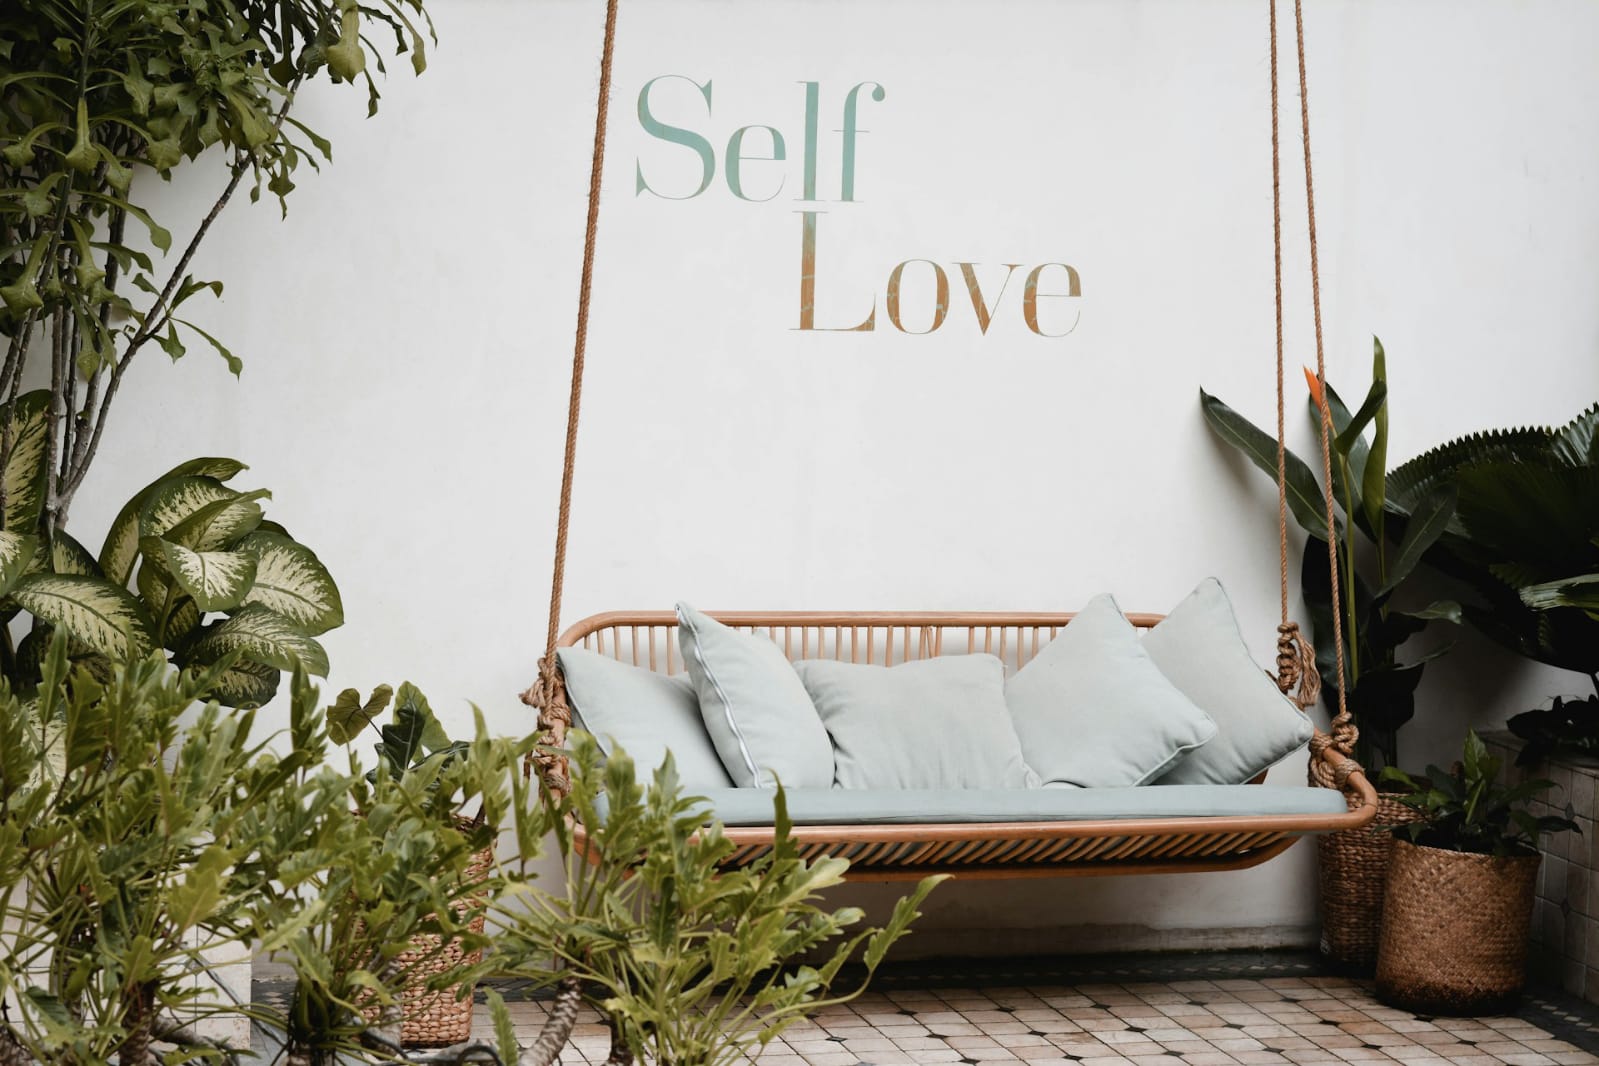 8 Cara Meningkatkan Self Love pada Diri Sendiri